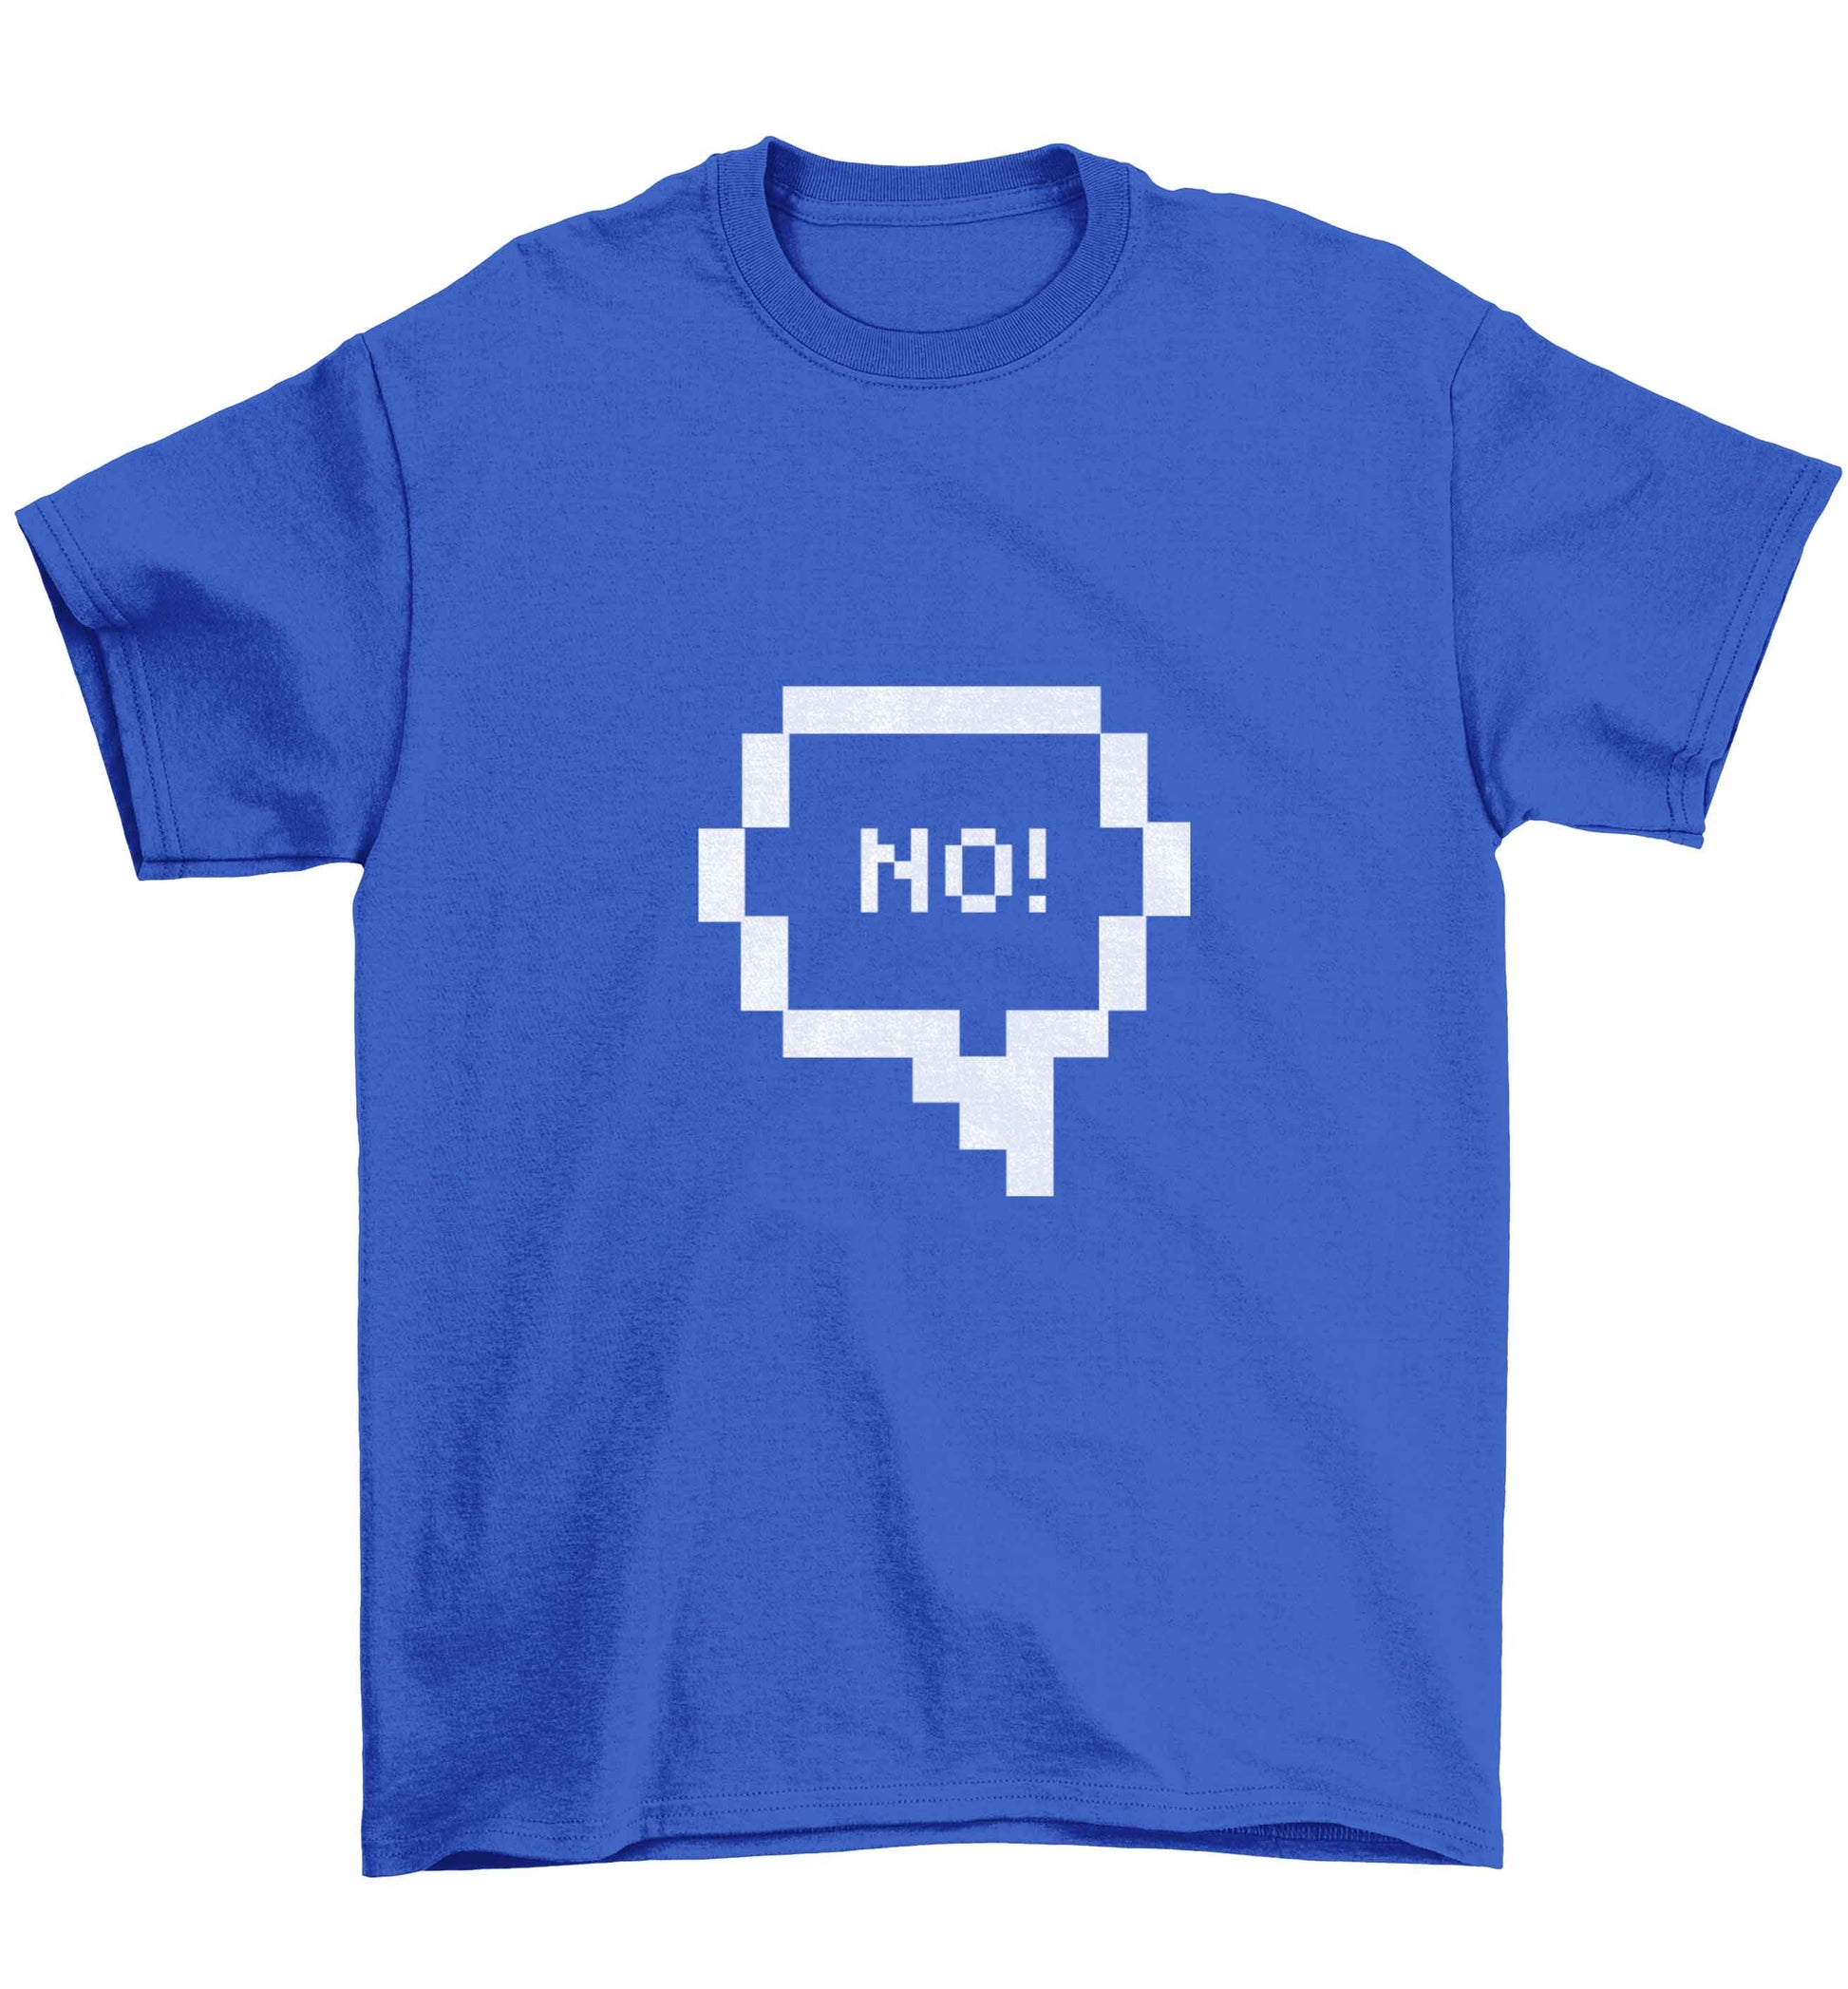 No Children's blue Tshirt 12-13 Years